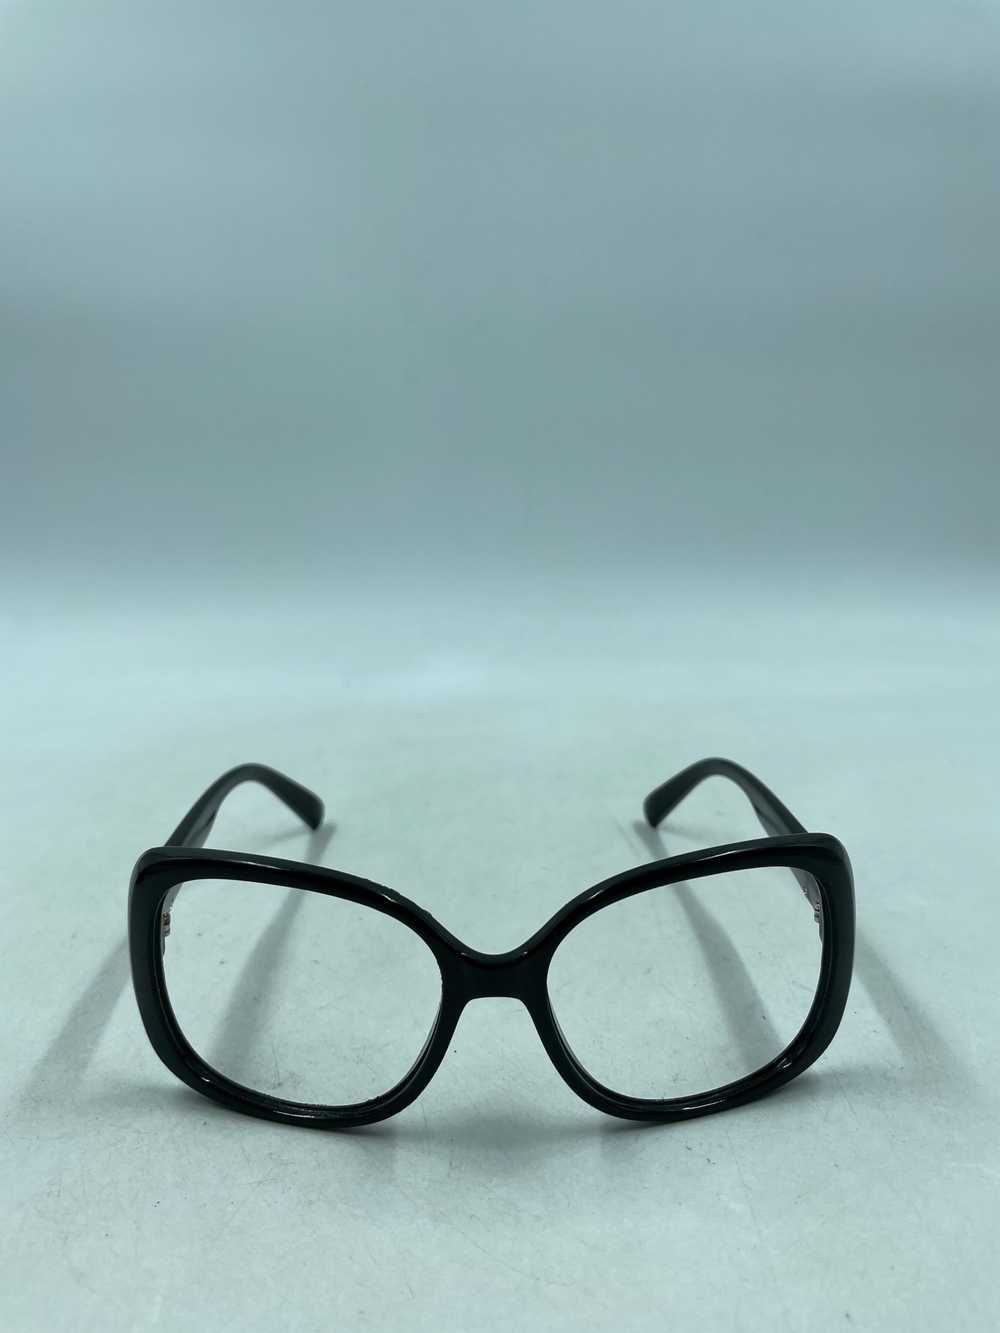 GUESS Black Square Eyeglasses - image 2